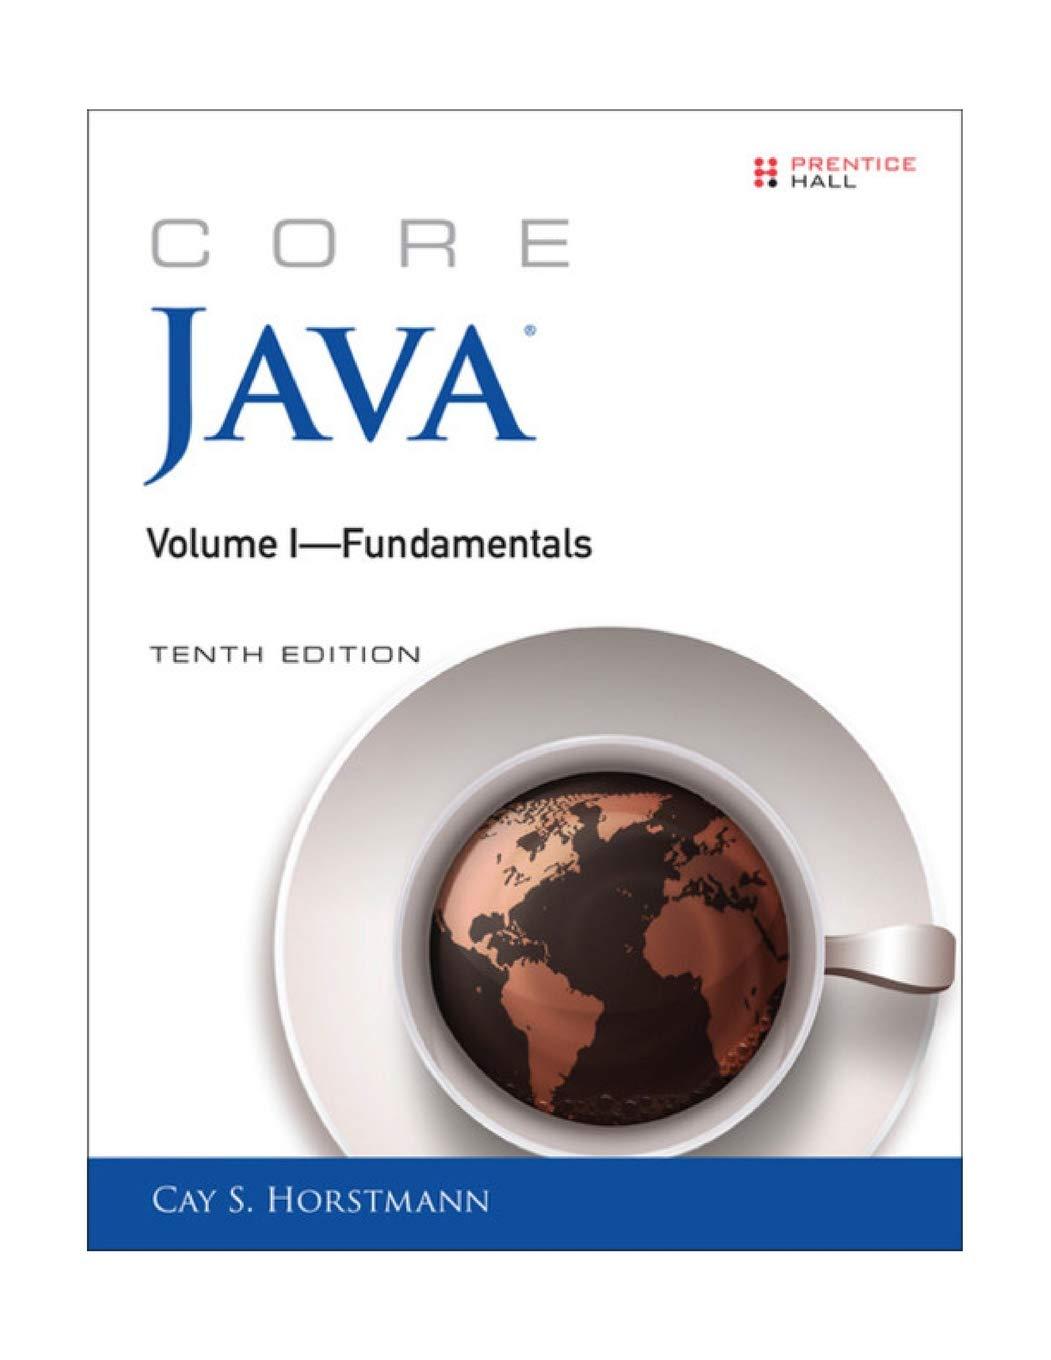 core java fundamentals 10th edition cay s. horstmann 0134177304, 978-0134177304